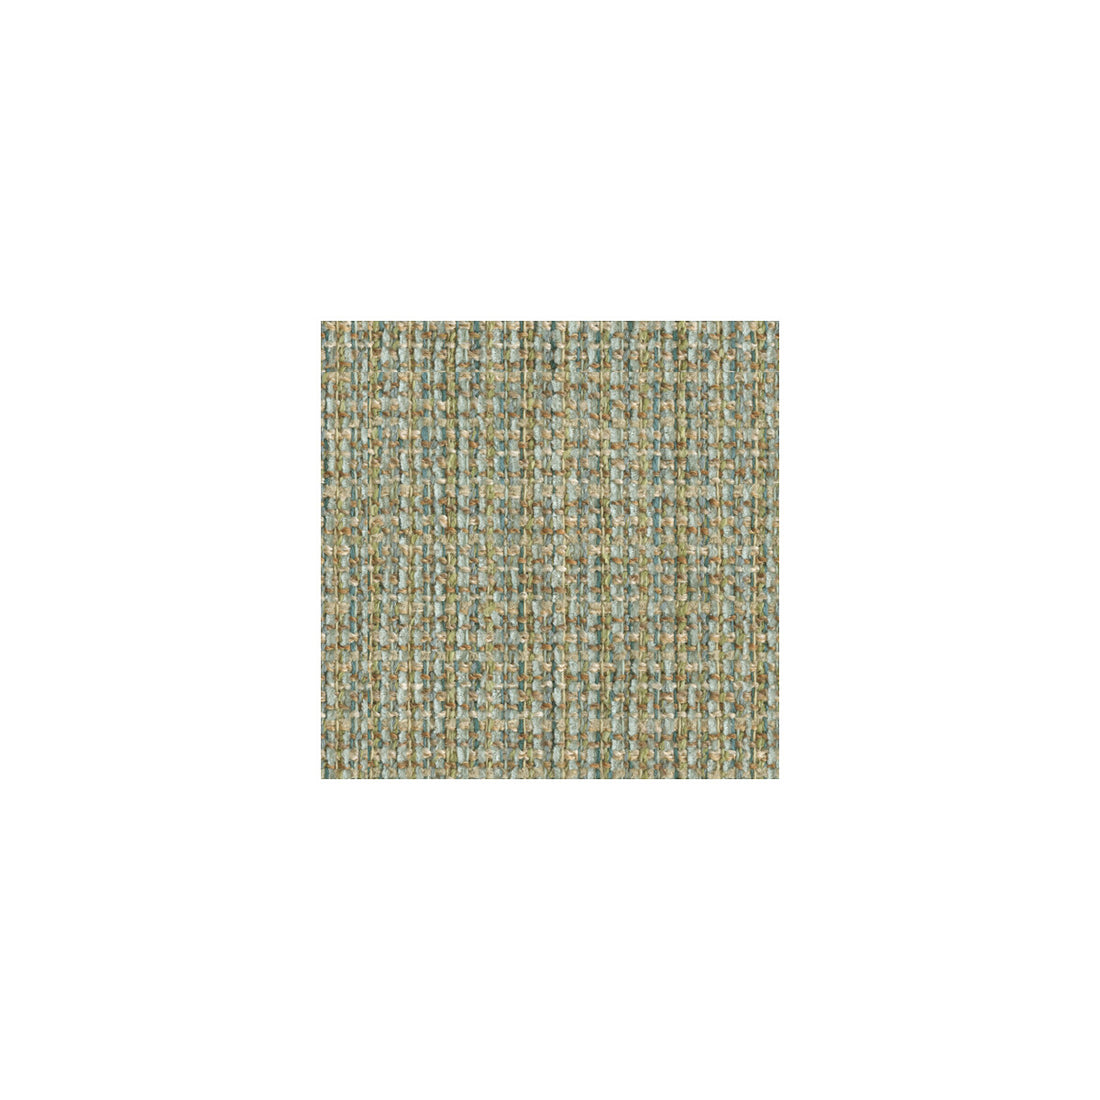 Kravet Smart fabric in 30625-1523 color - pattern 30625.1523.0 - by Kravet Smart